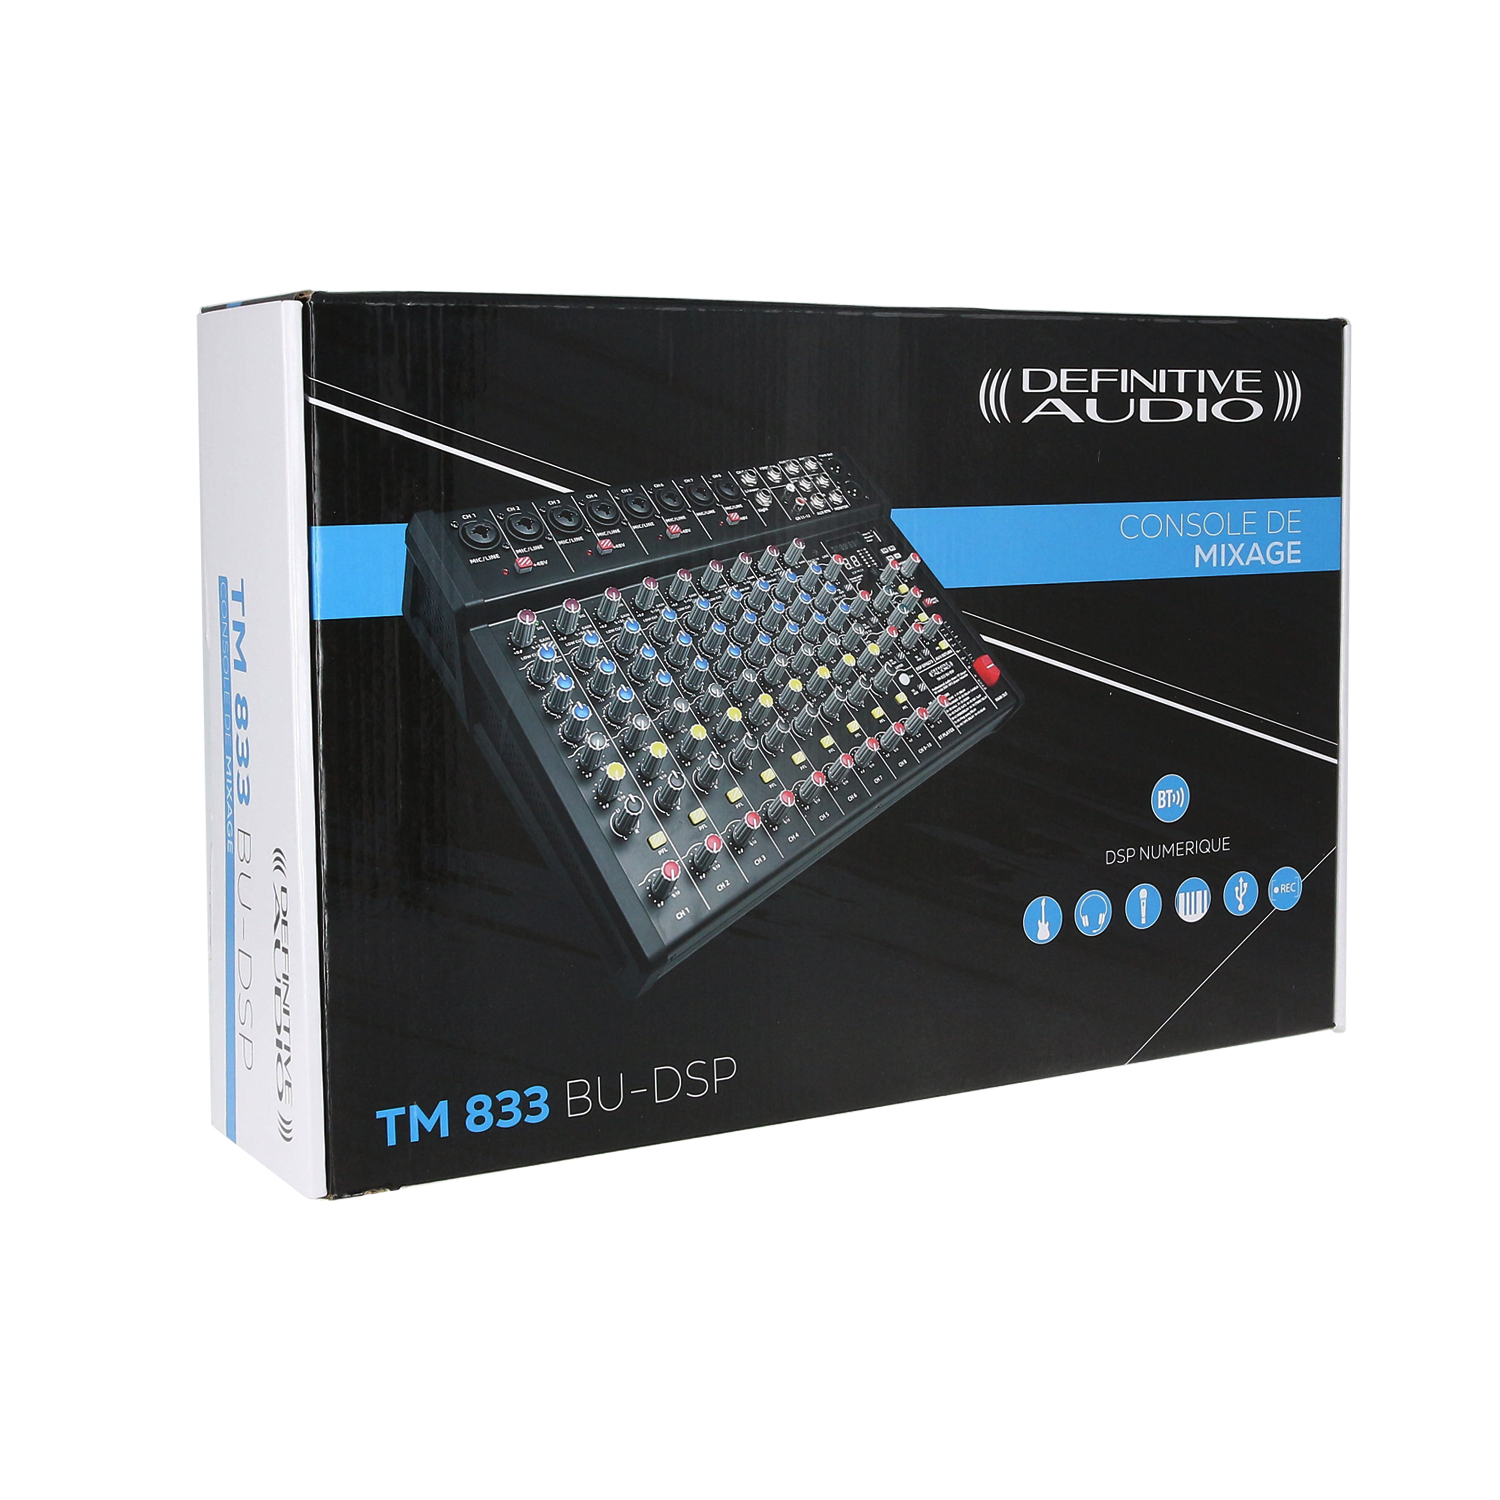 Definitive Audio Tm 833 Bu-dsp - Analog mixing desk - Variation 7